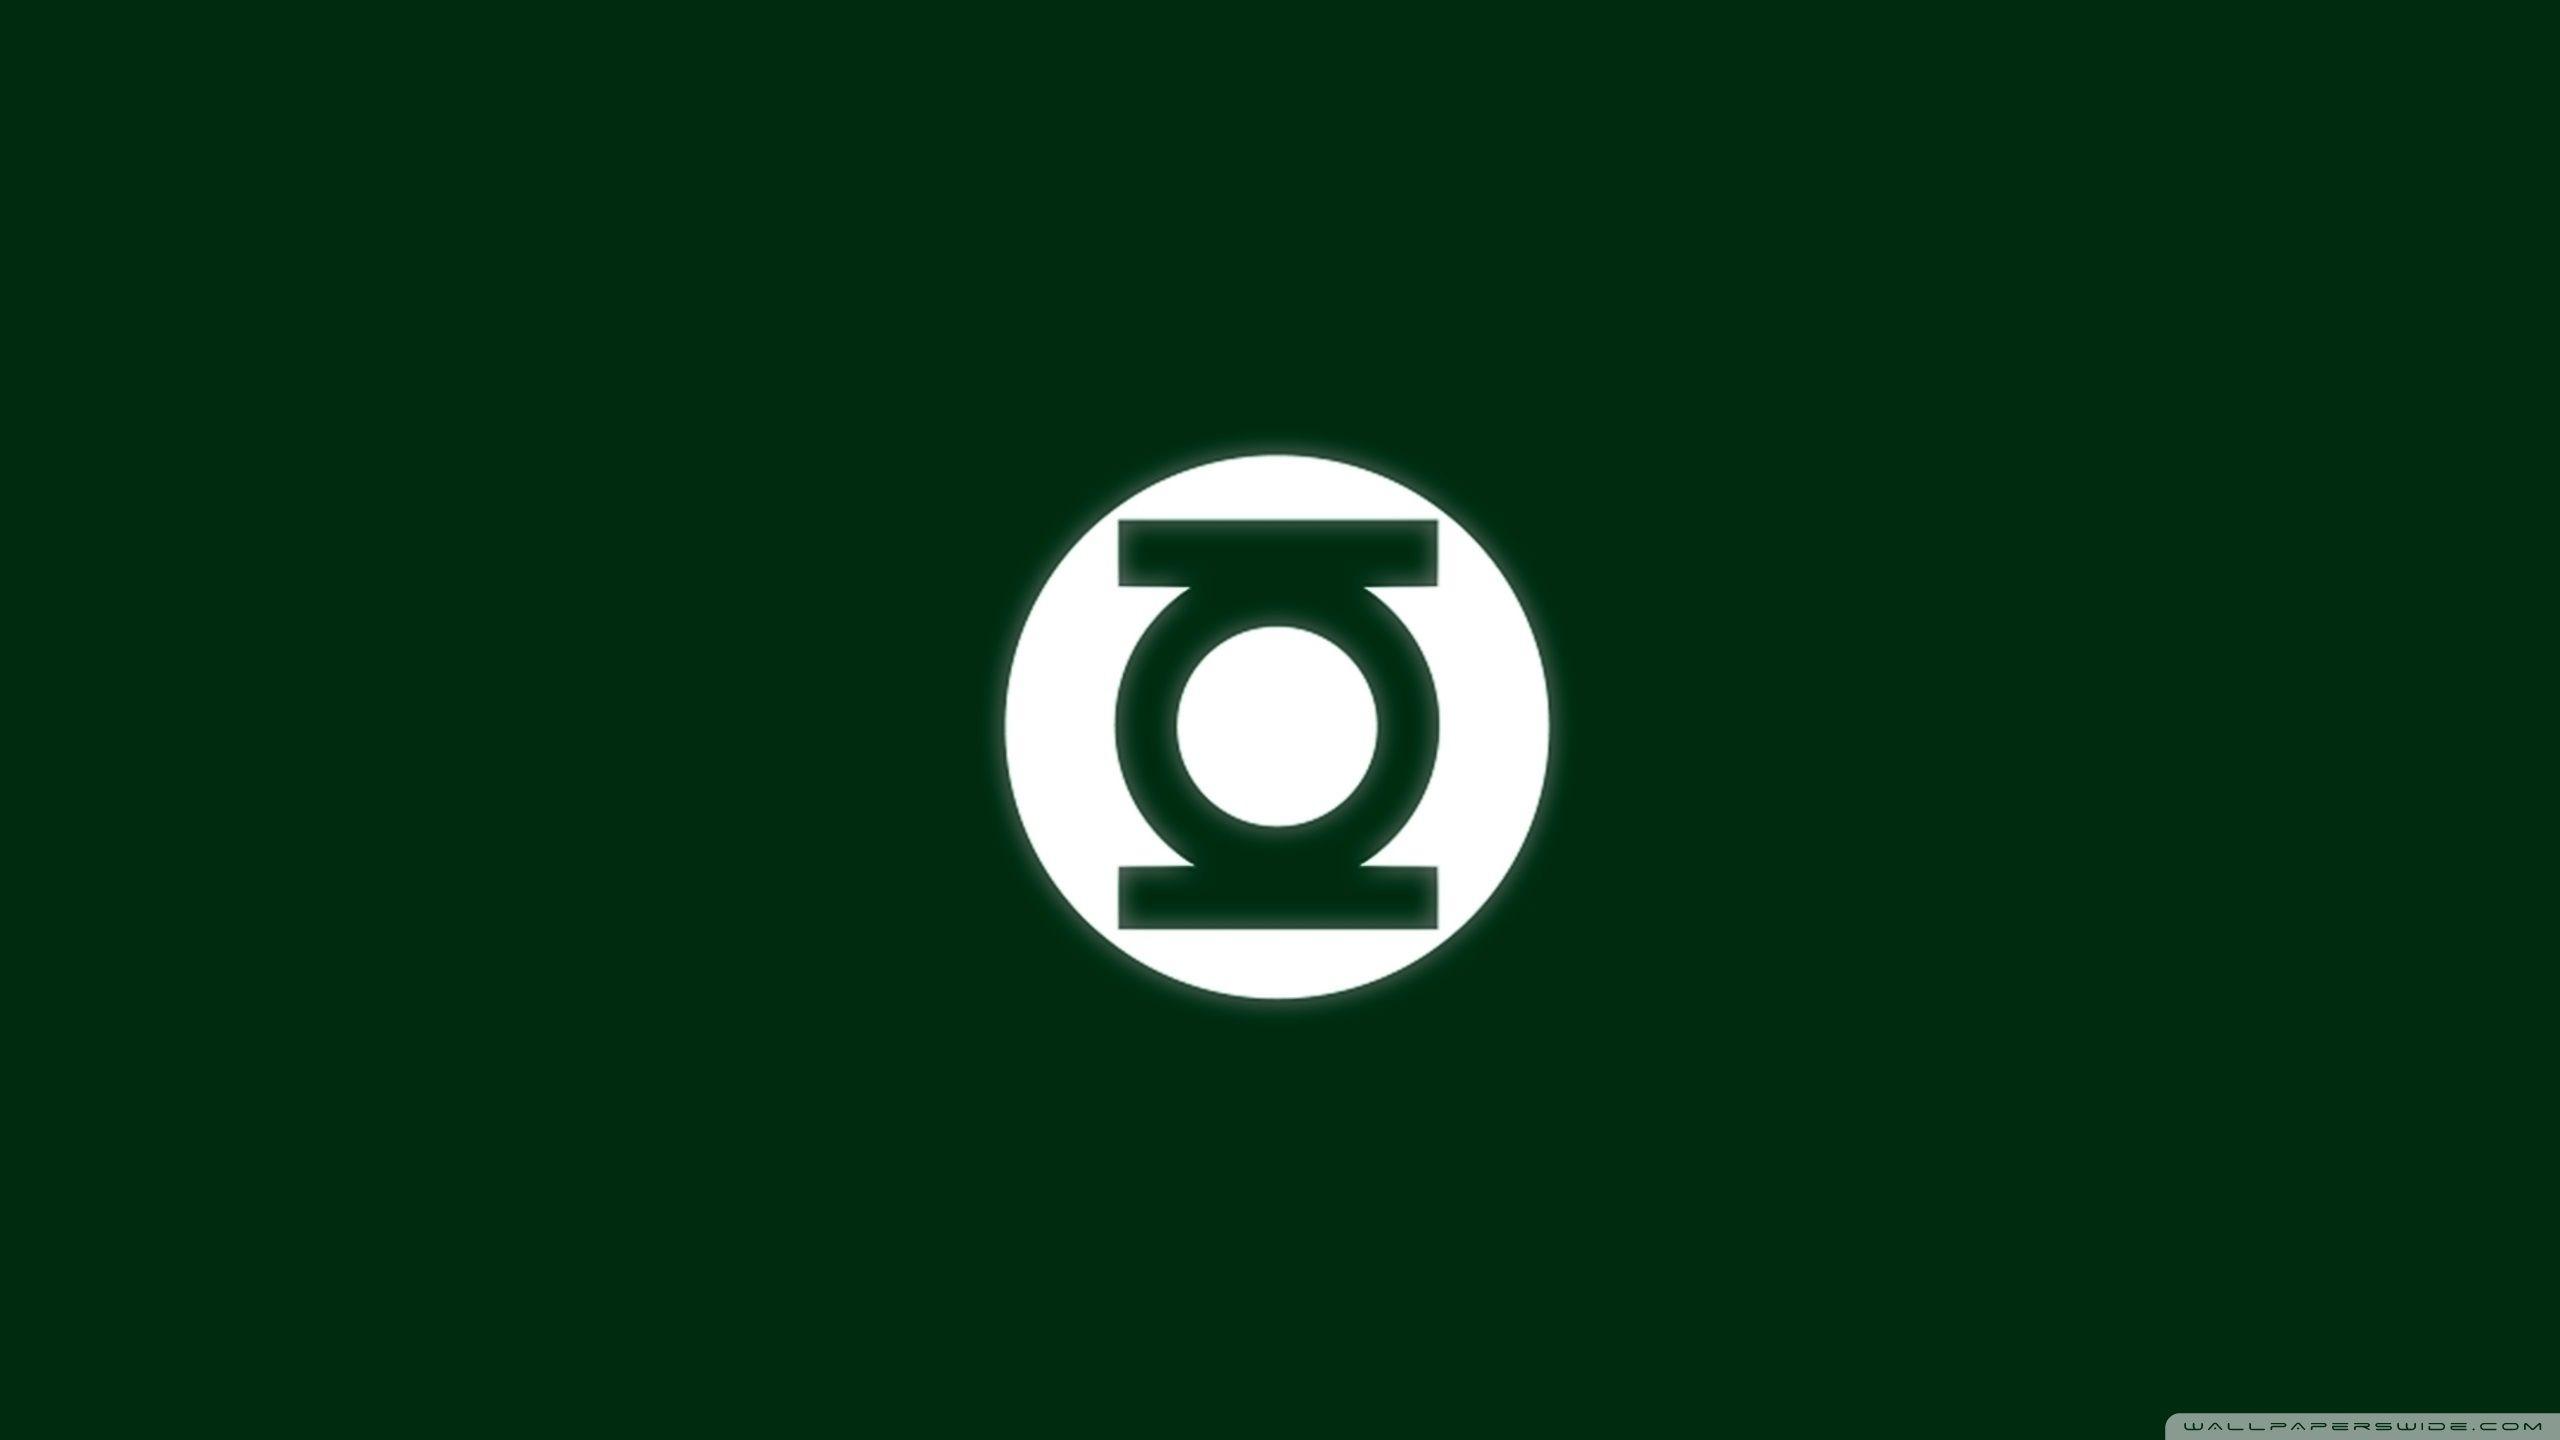 Top Green Lantern Logo Wallpaper FULL HD 1920×1080 For PC Desktop. Green lantern logo, Green lantern, Green lantern wallpaper